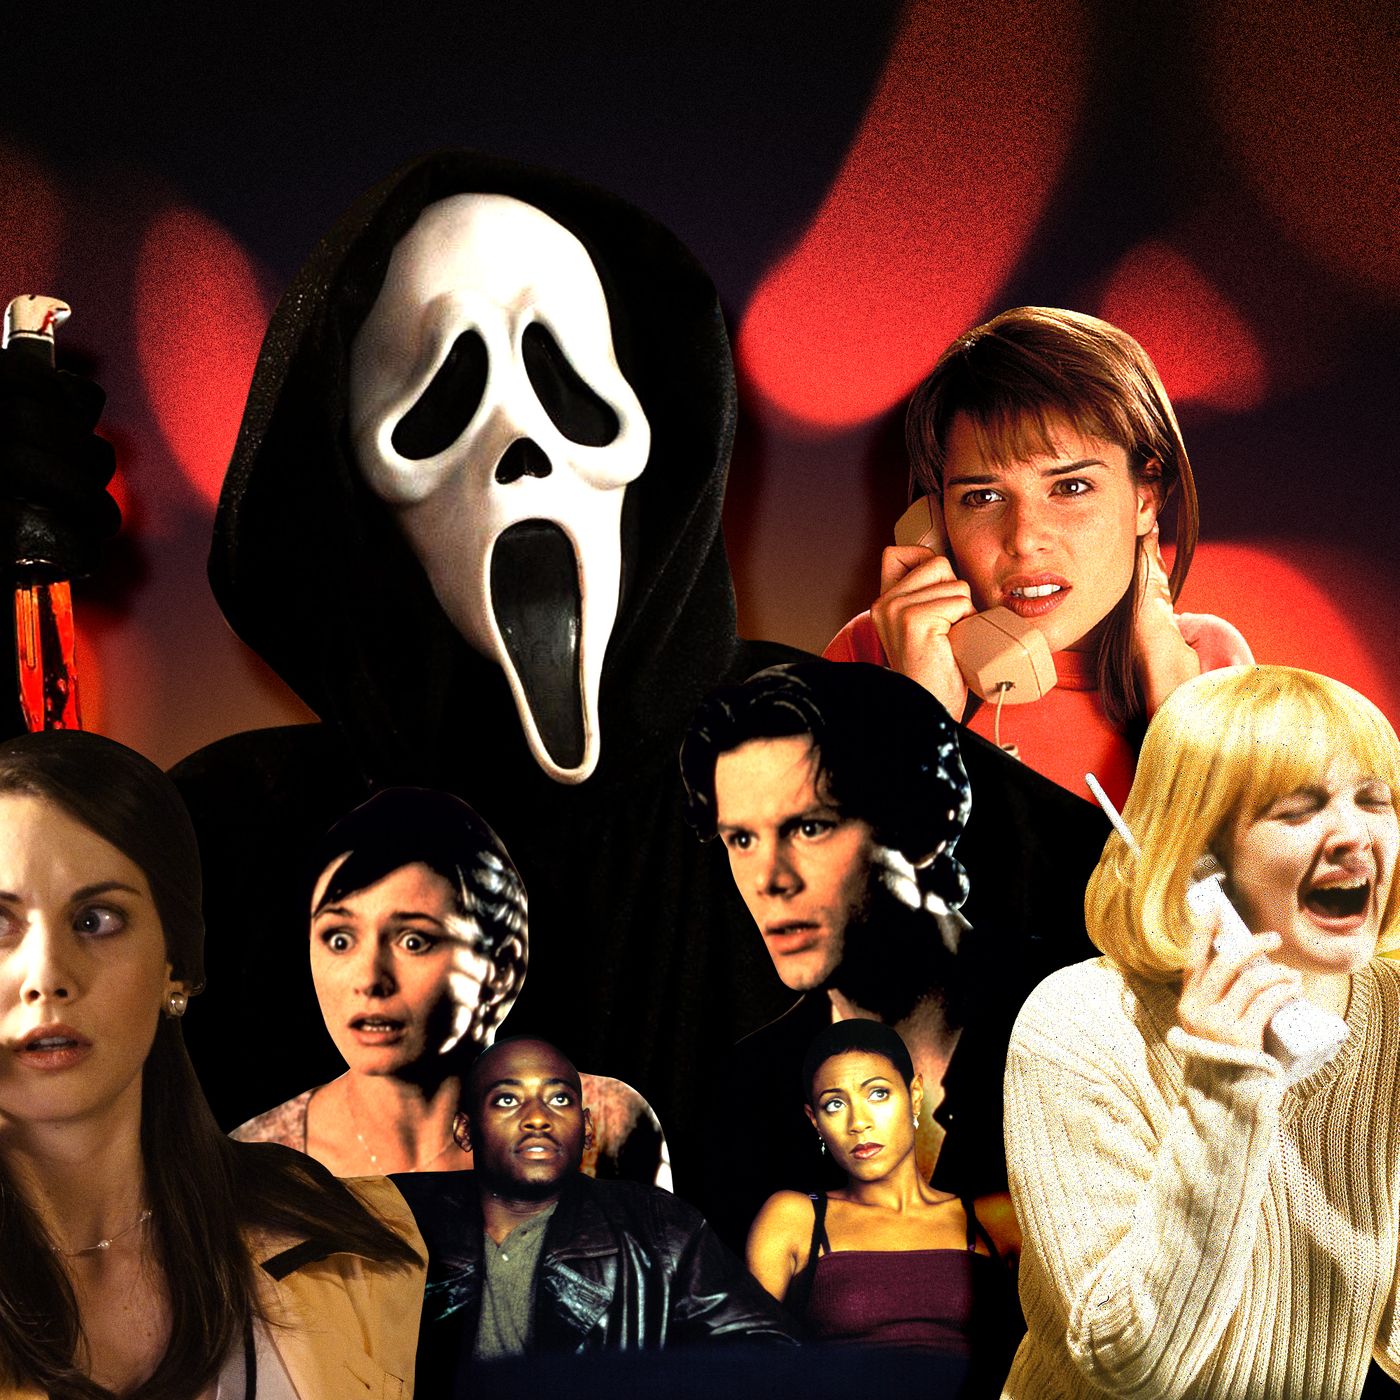 All the Ghostface Killers in the 'Scream' Movies so Far